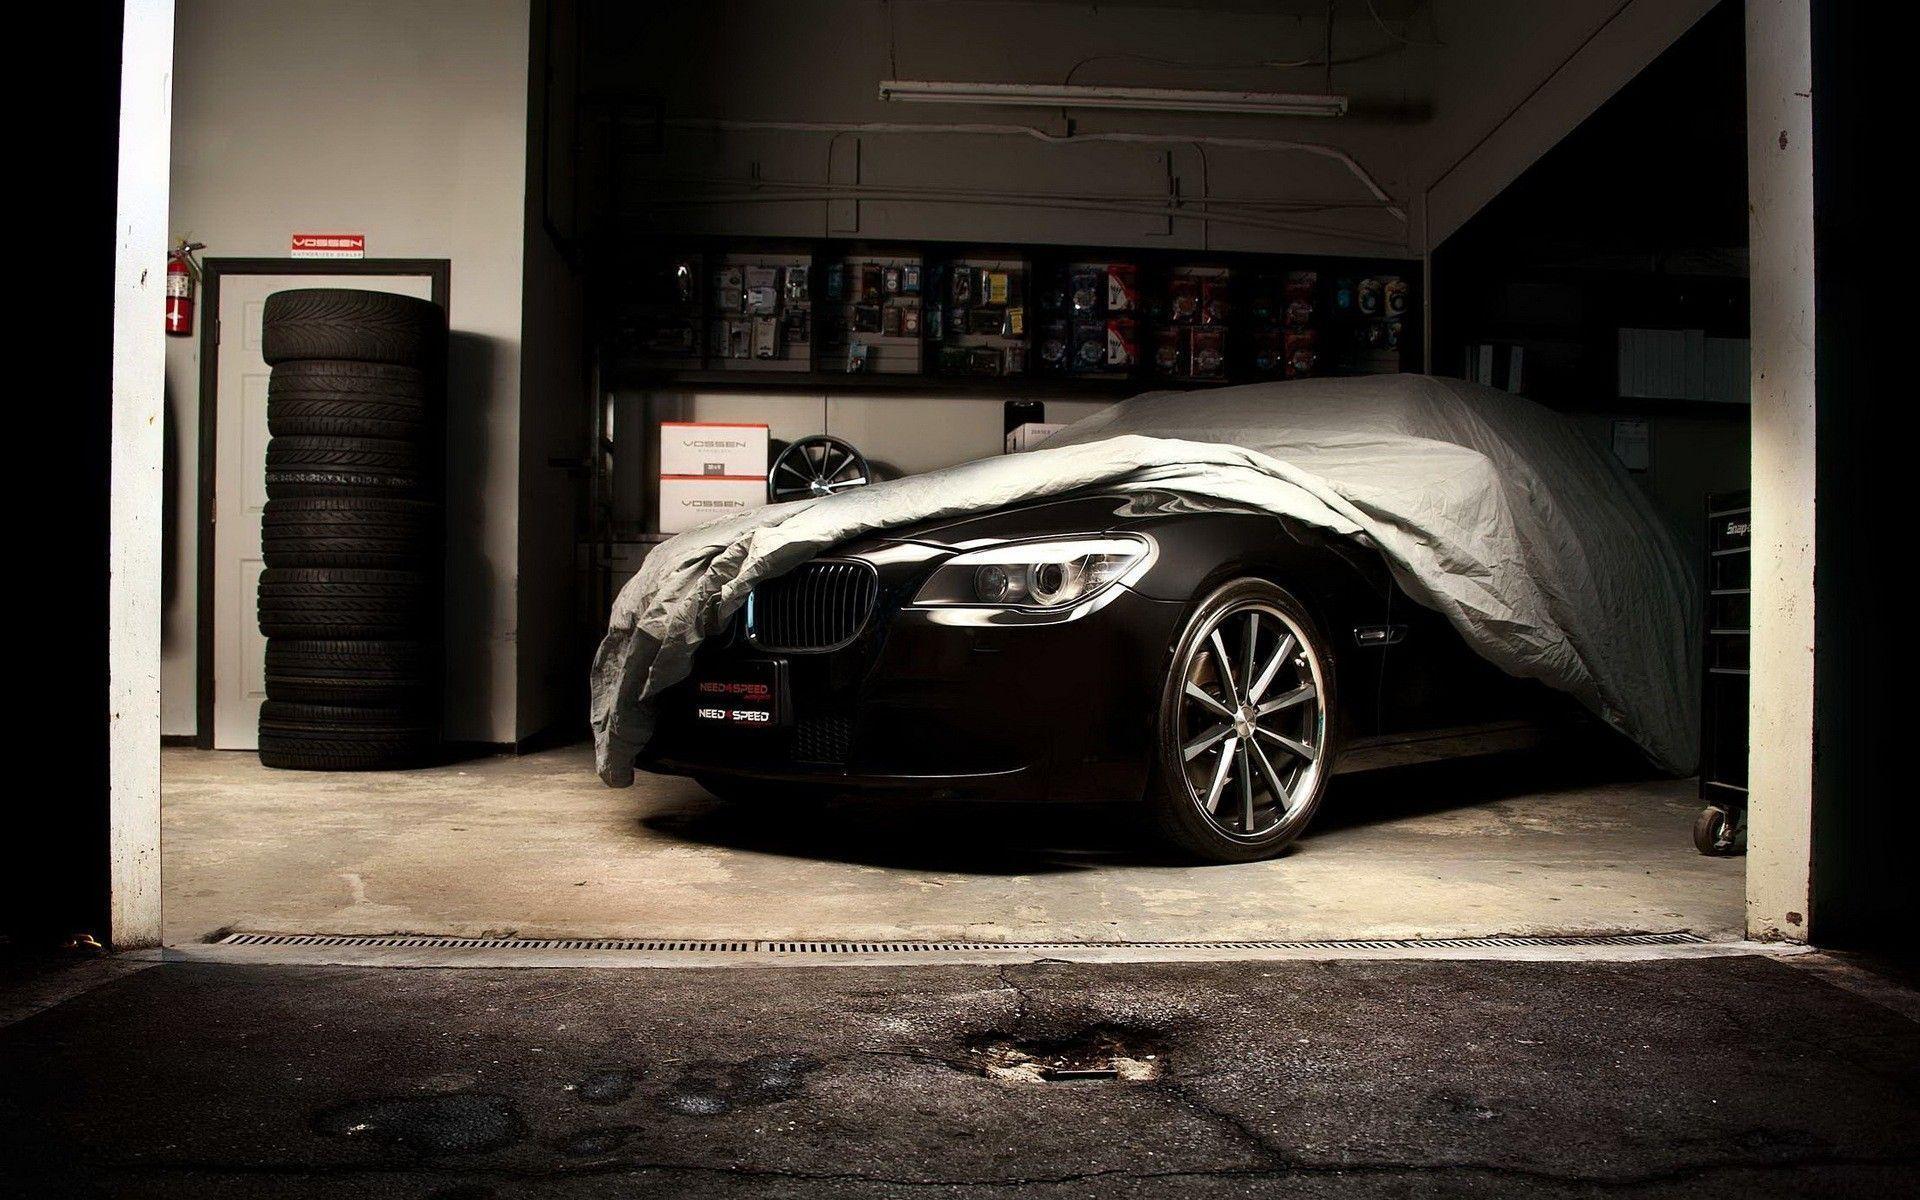 Black Cars BMW 7 Series Car Tires Garages Vehicles